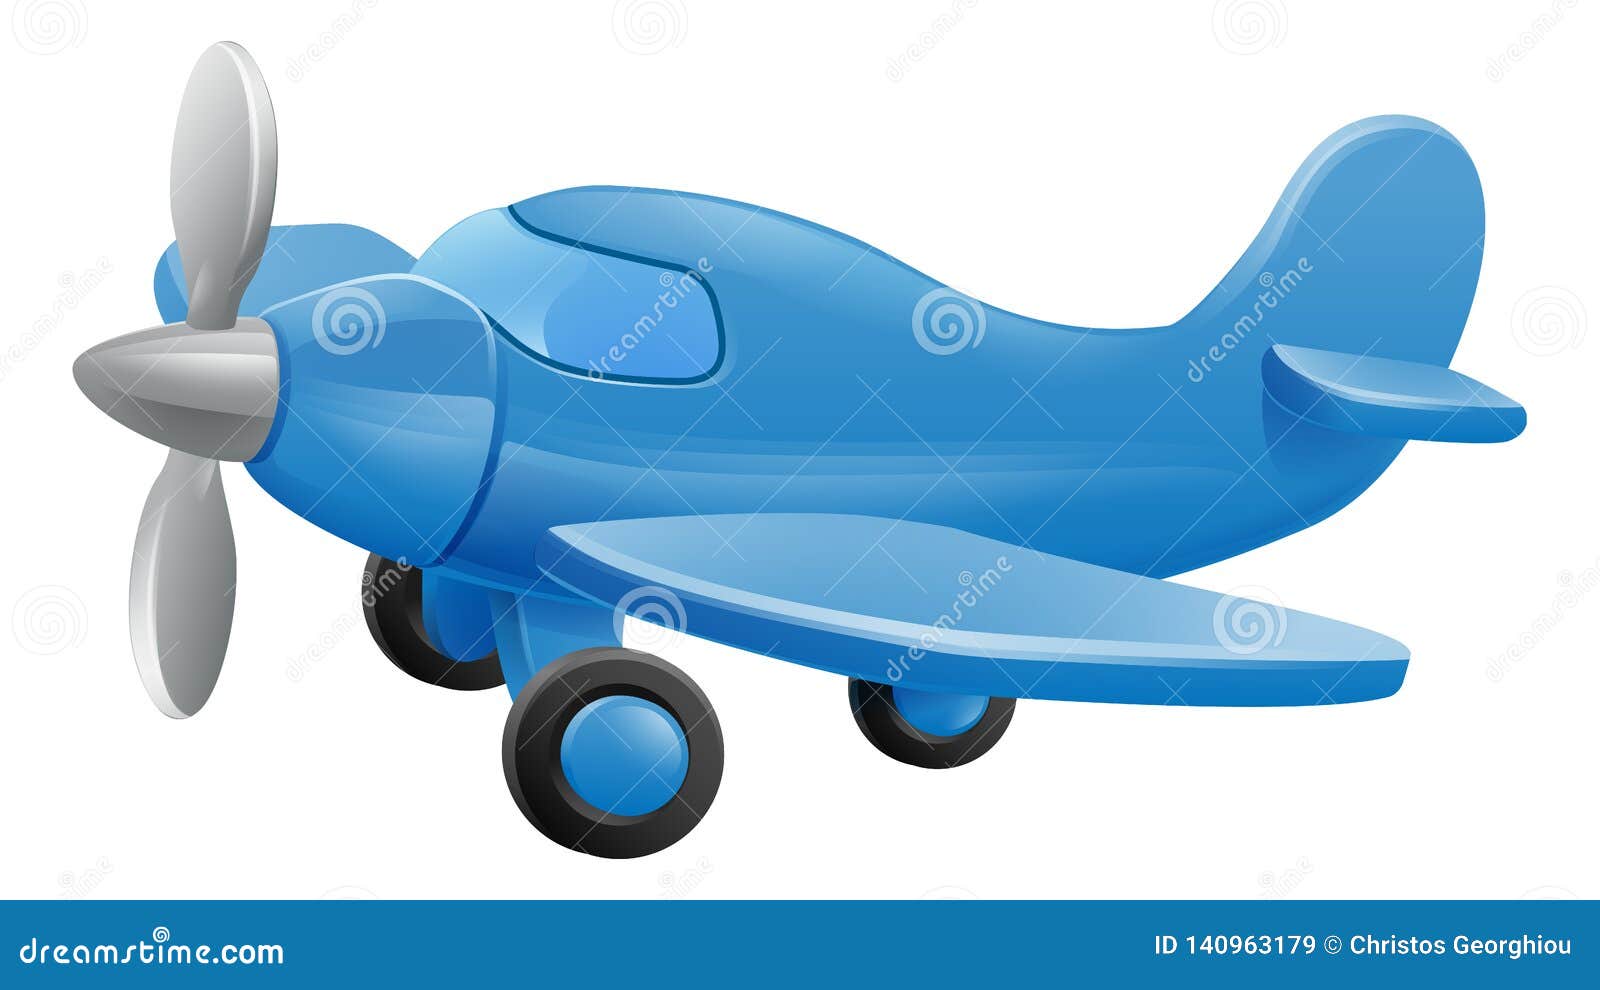 Cute Airplane Cartoon stock vector. Illustration of cartoons - 140963179